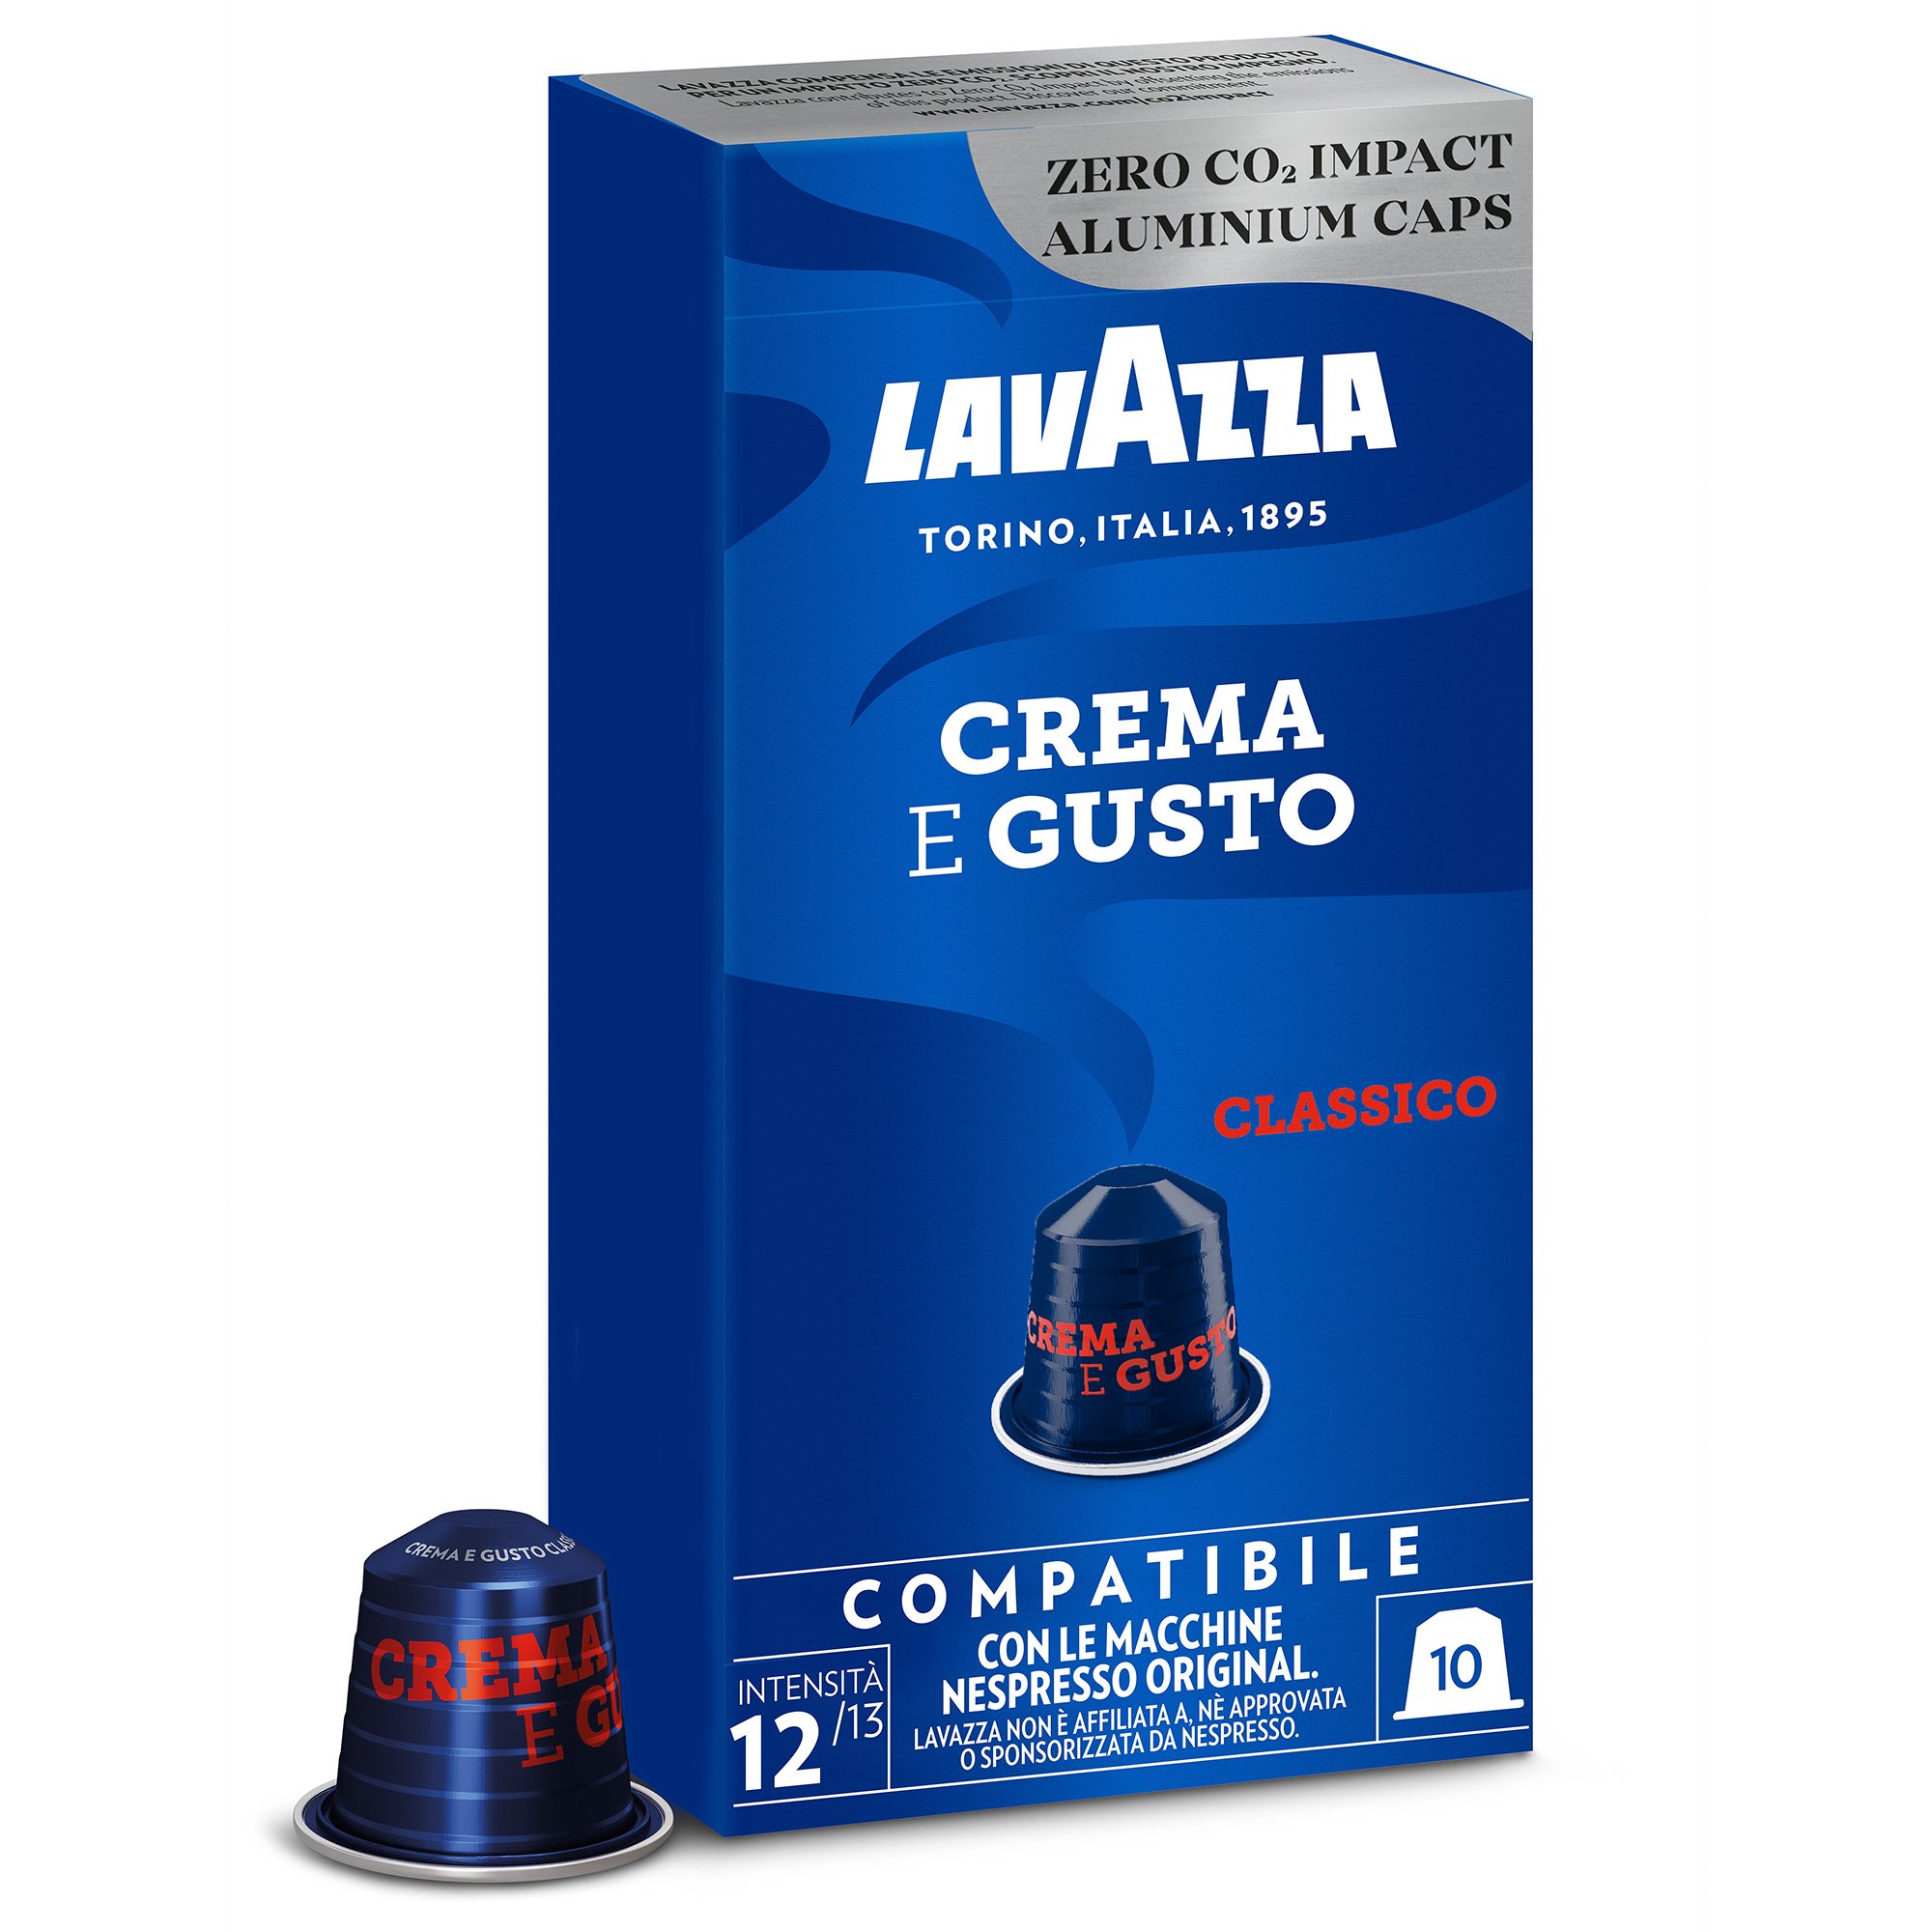 Lavazza Crema e Gusto Classico kaffekapslar, 10 st